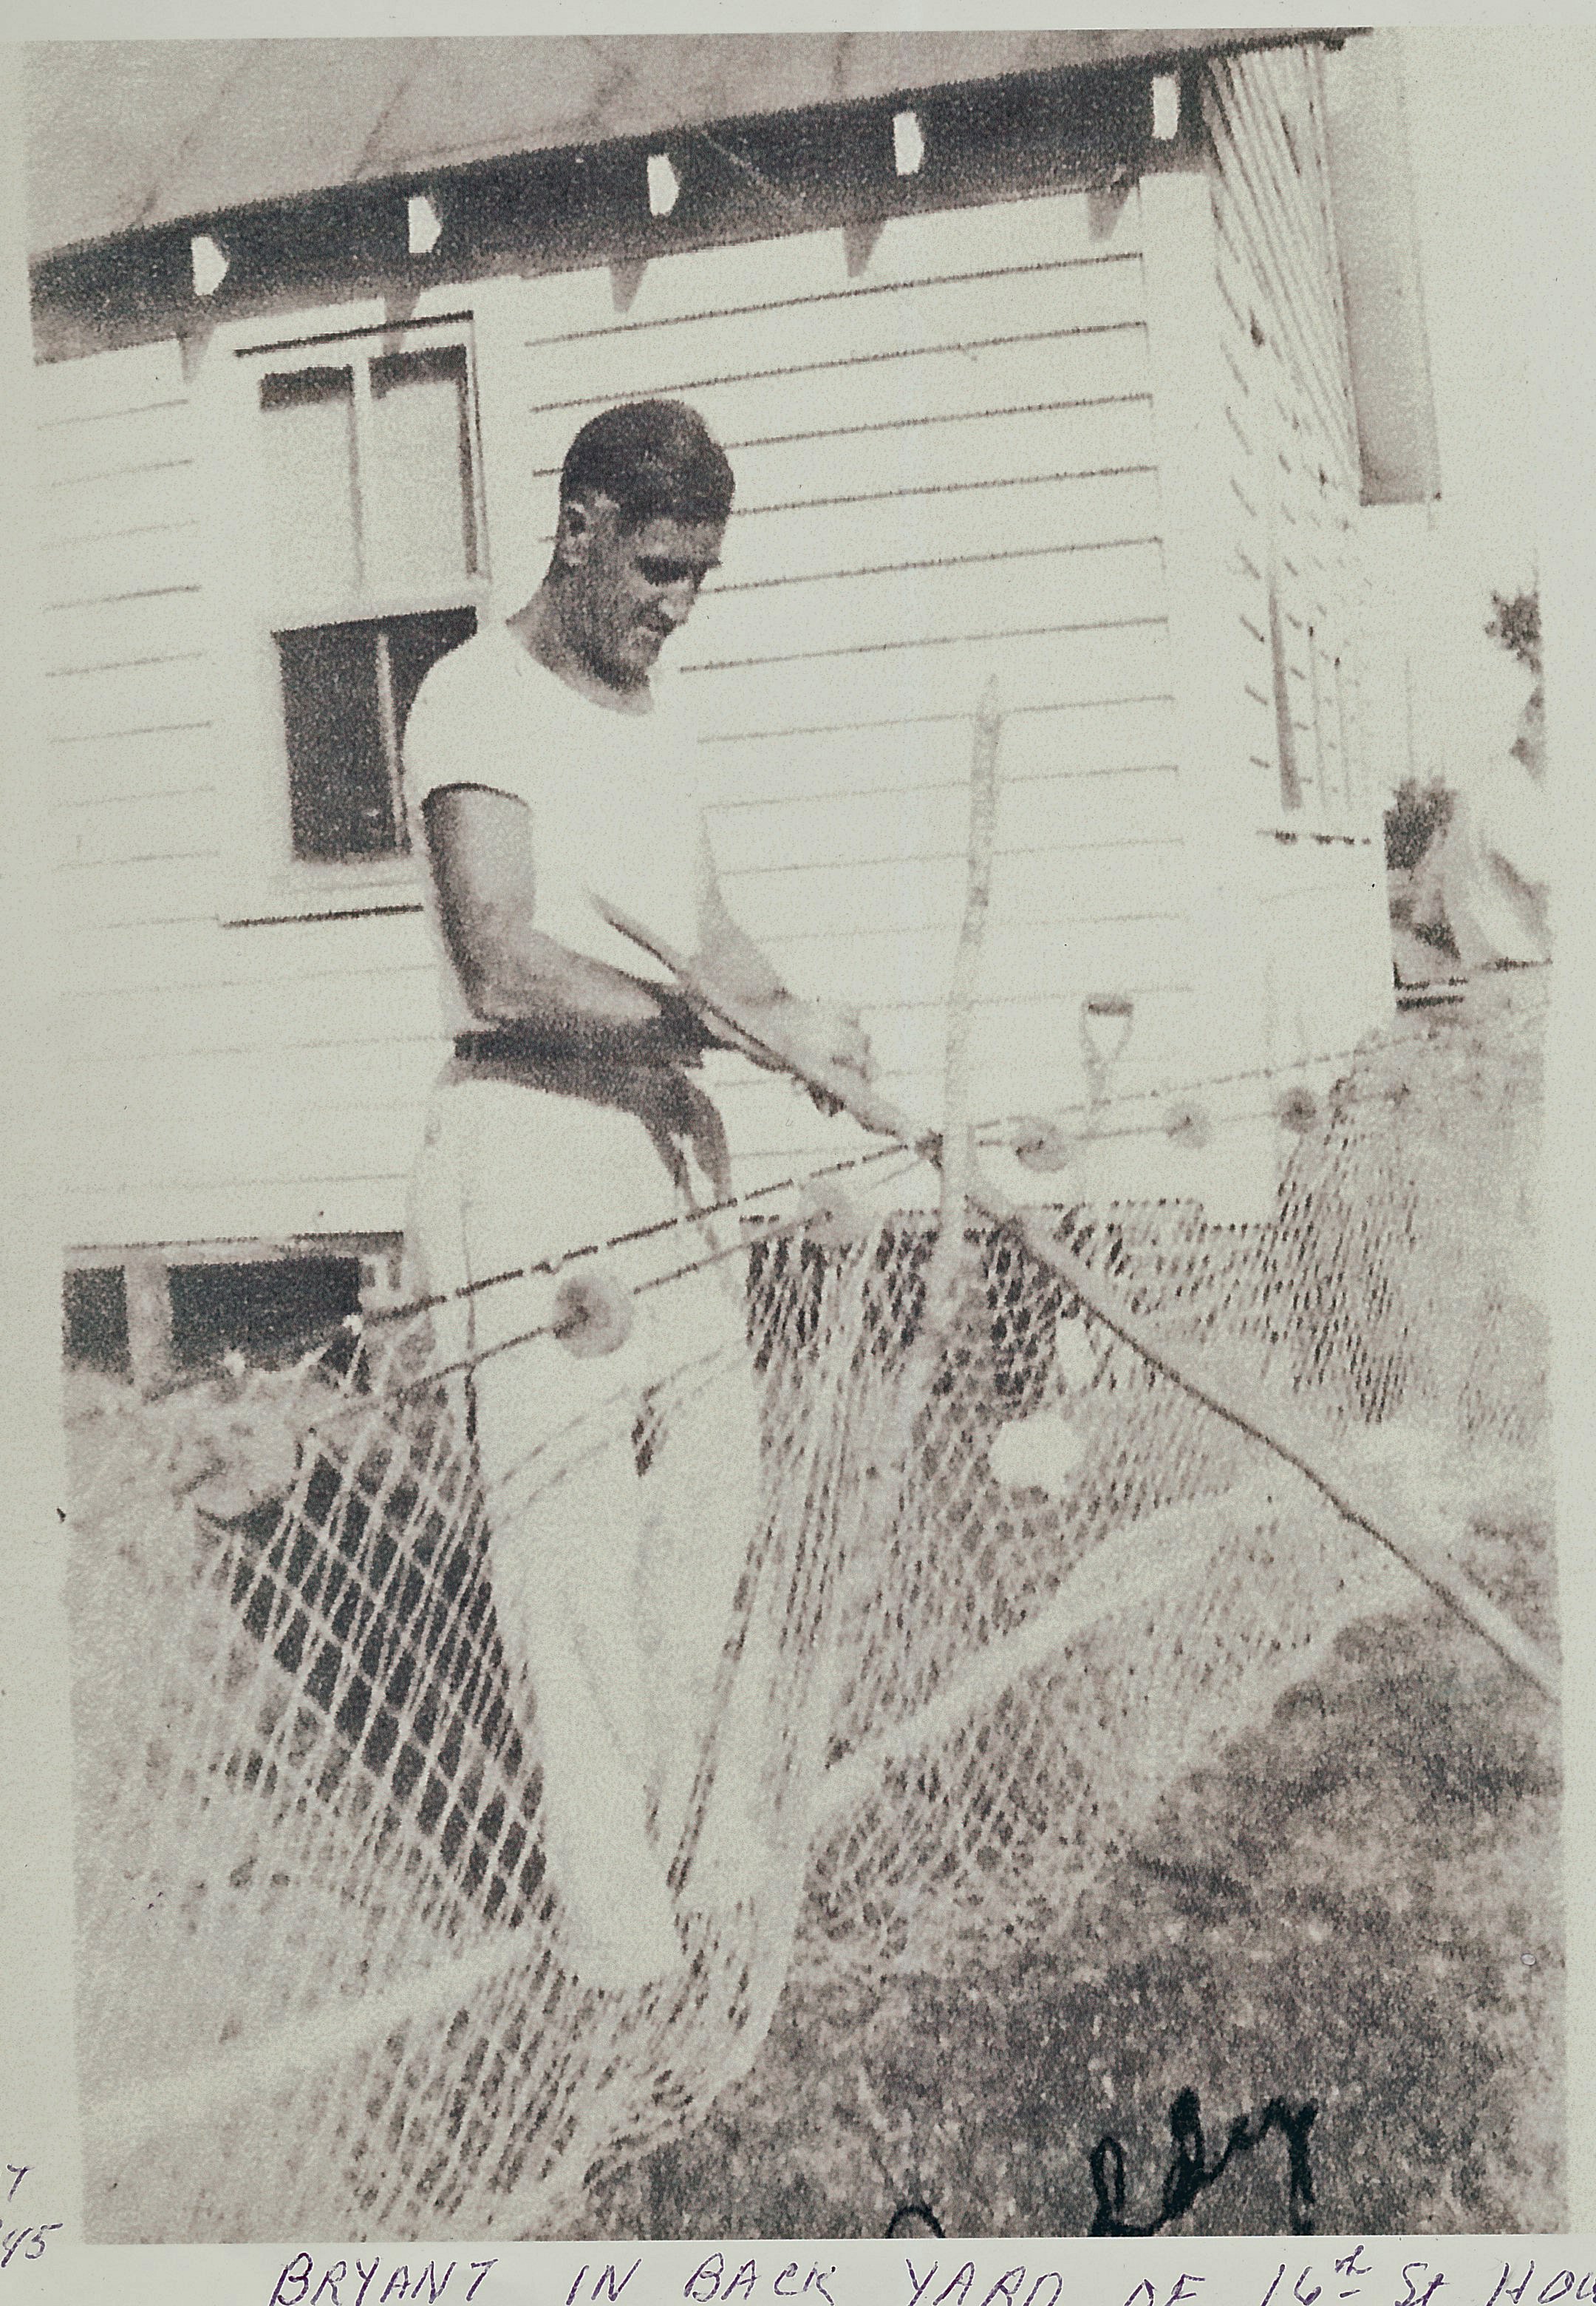 Bryant mending net at 304 S 16th St 1945